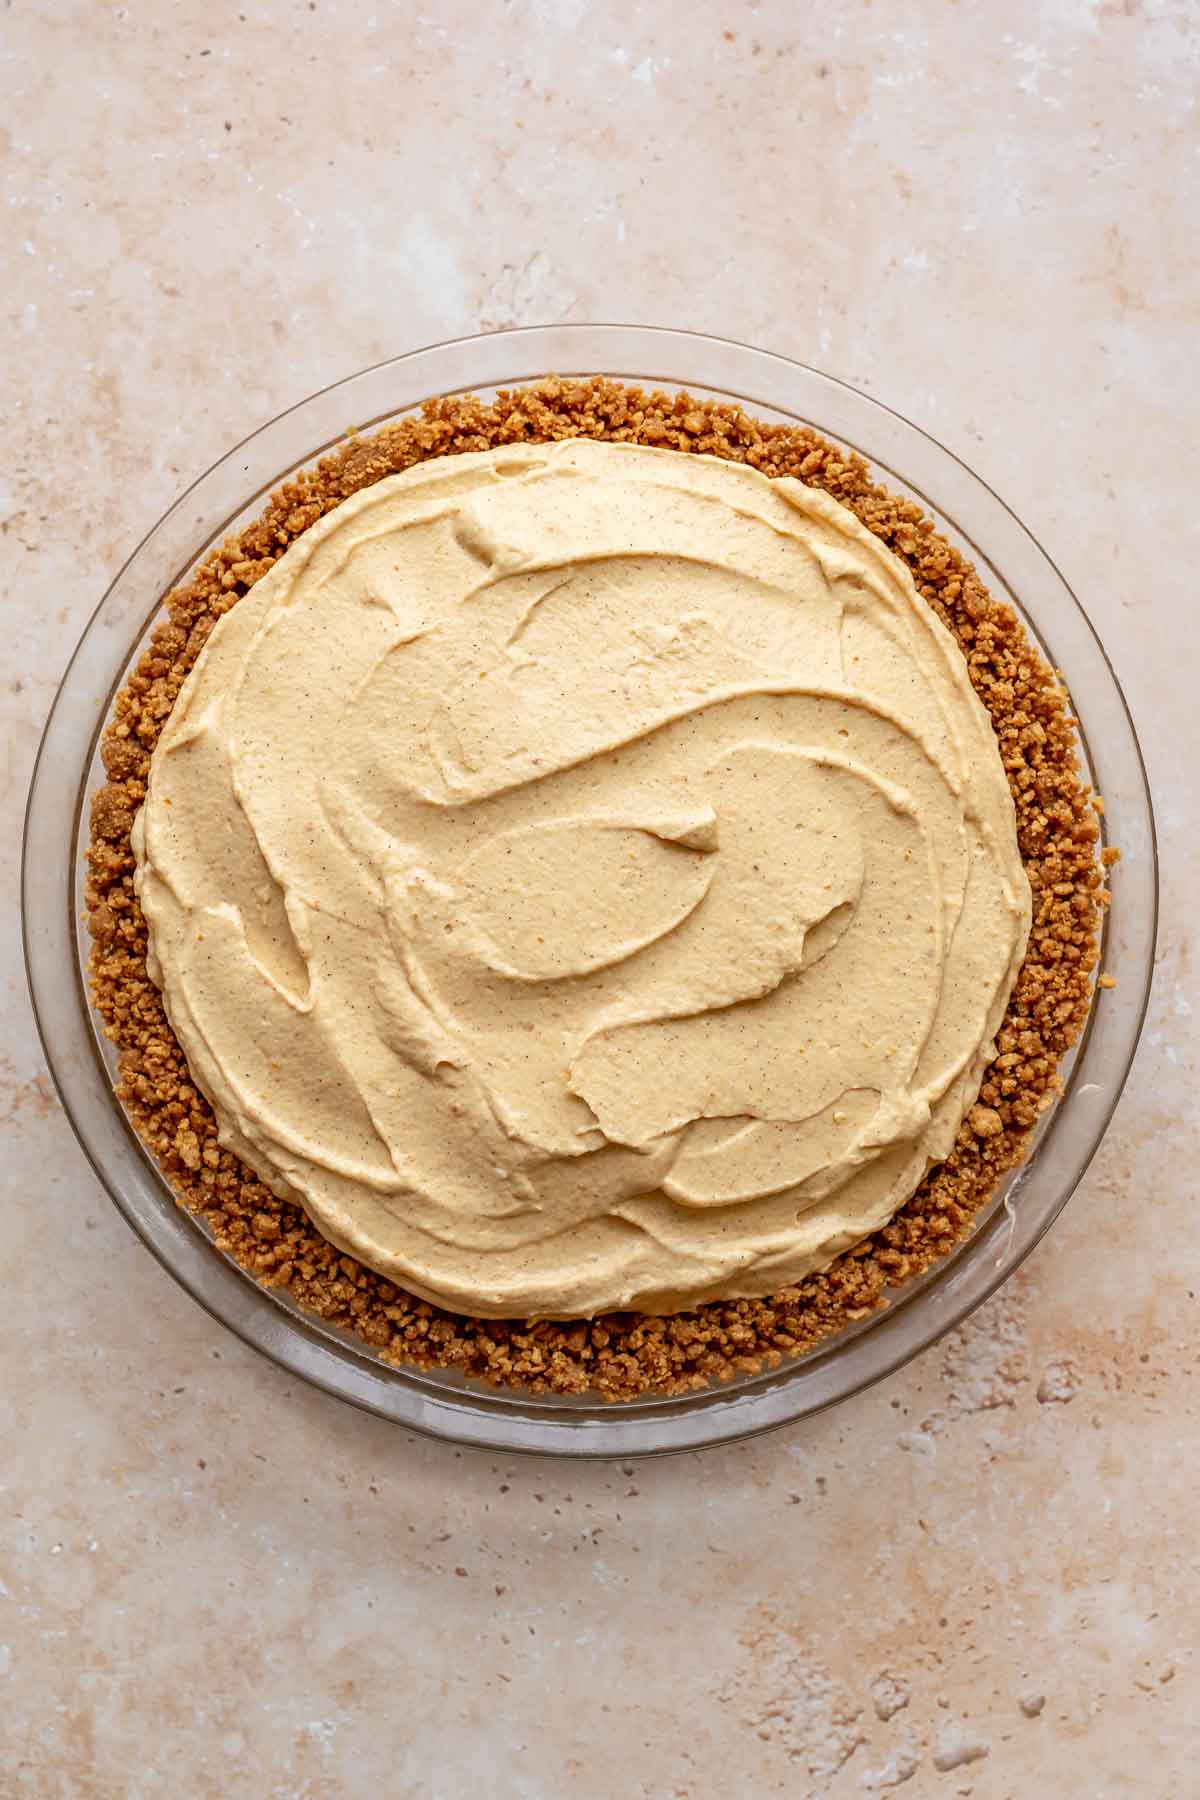 Pumpkin mousse filling spread into a crumb crust in a pie dish.